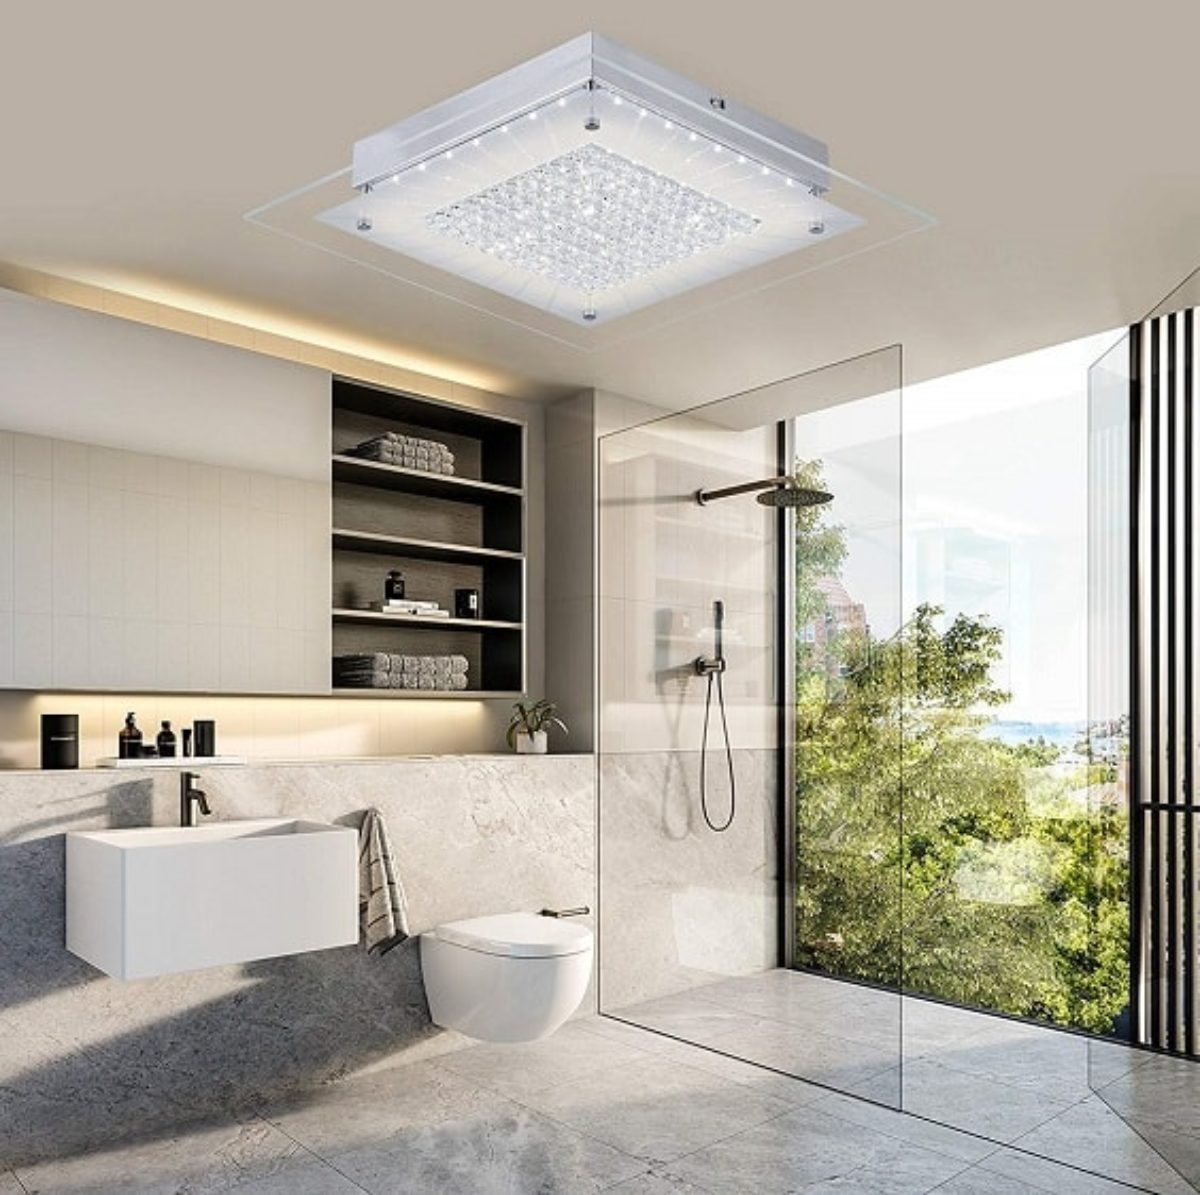 Blanc Froid MCTECH 6W/12W Rectangle LED Wall Light Acrylic Bathroom Lighting Living Room Bedroom Hallway Aluminium Waterproof Elegant 1x6w Rectangle